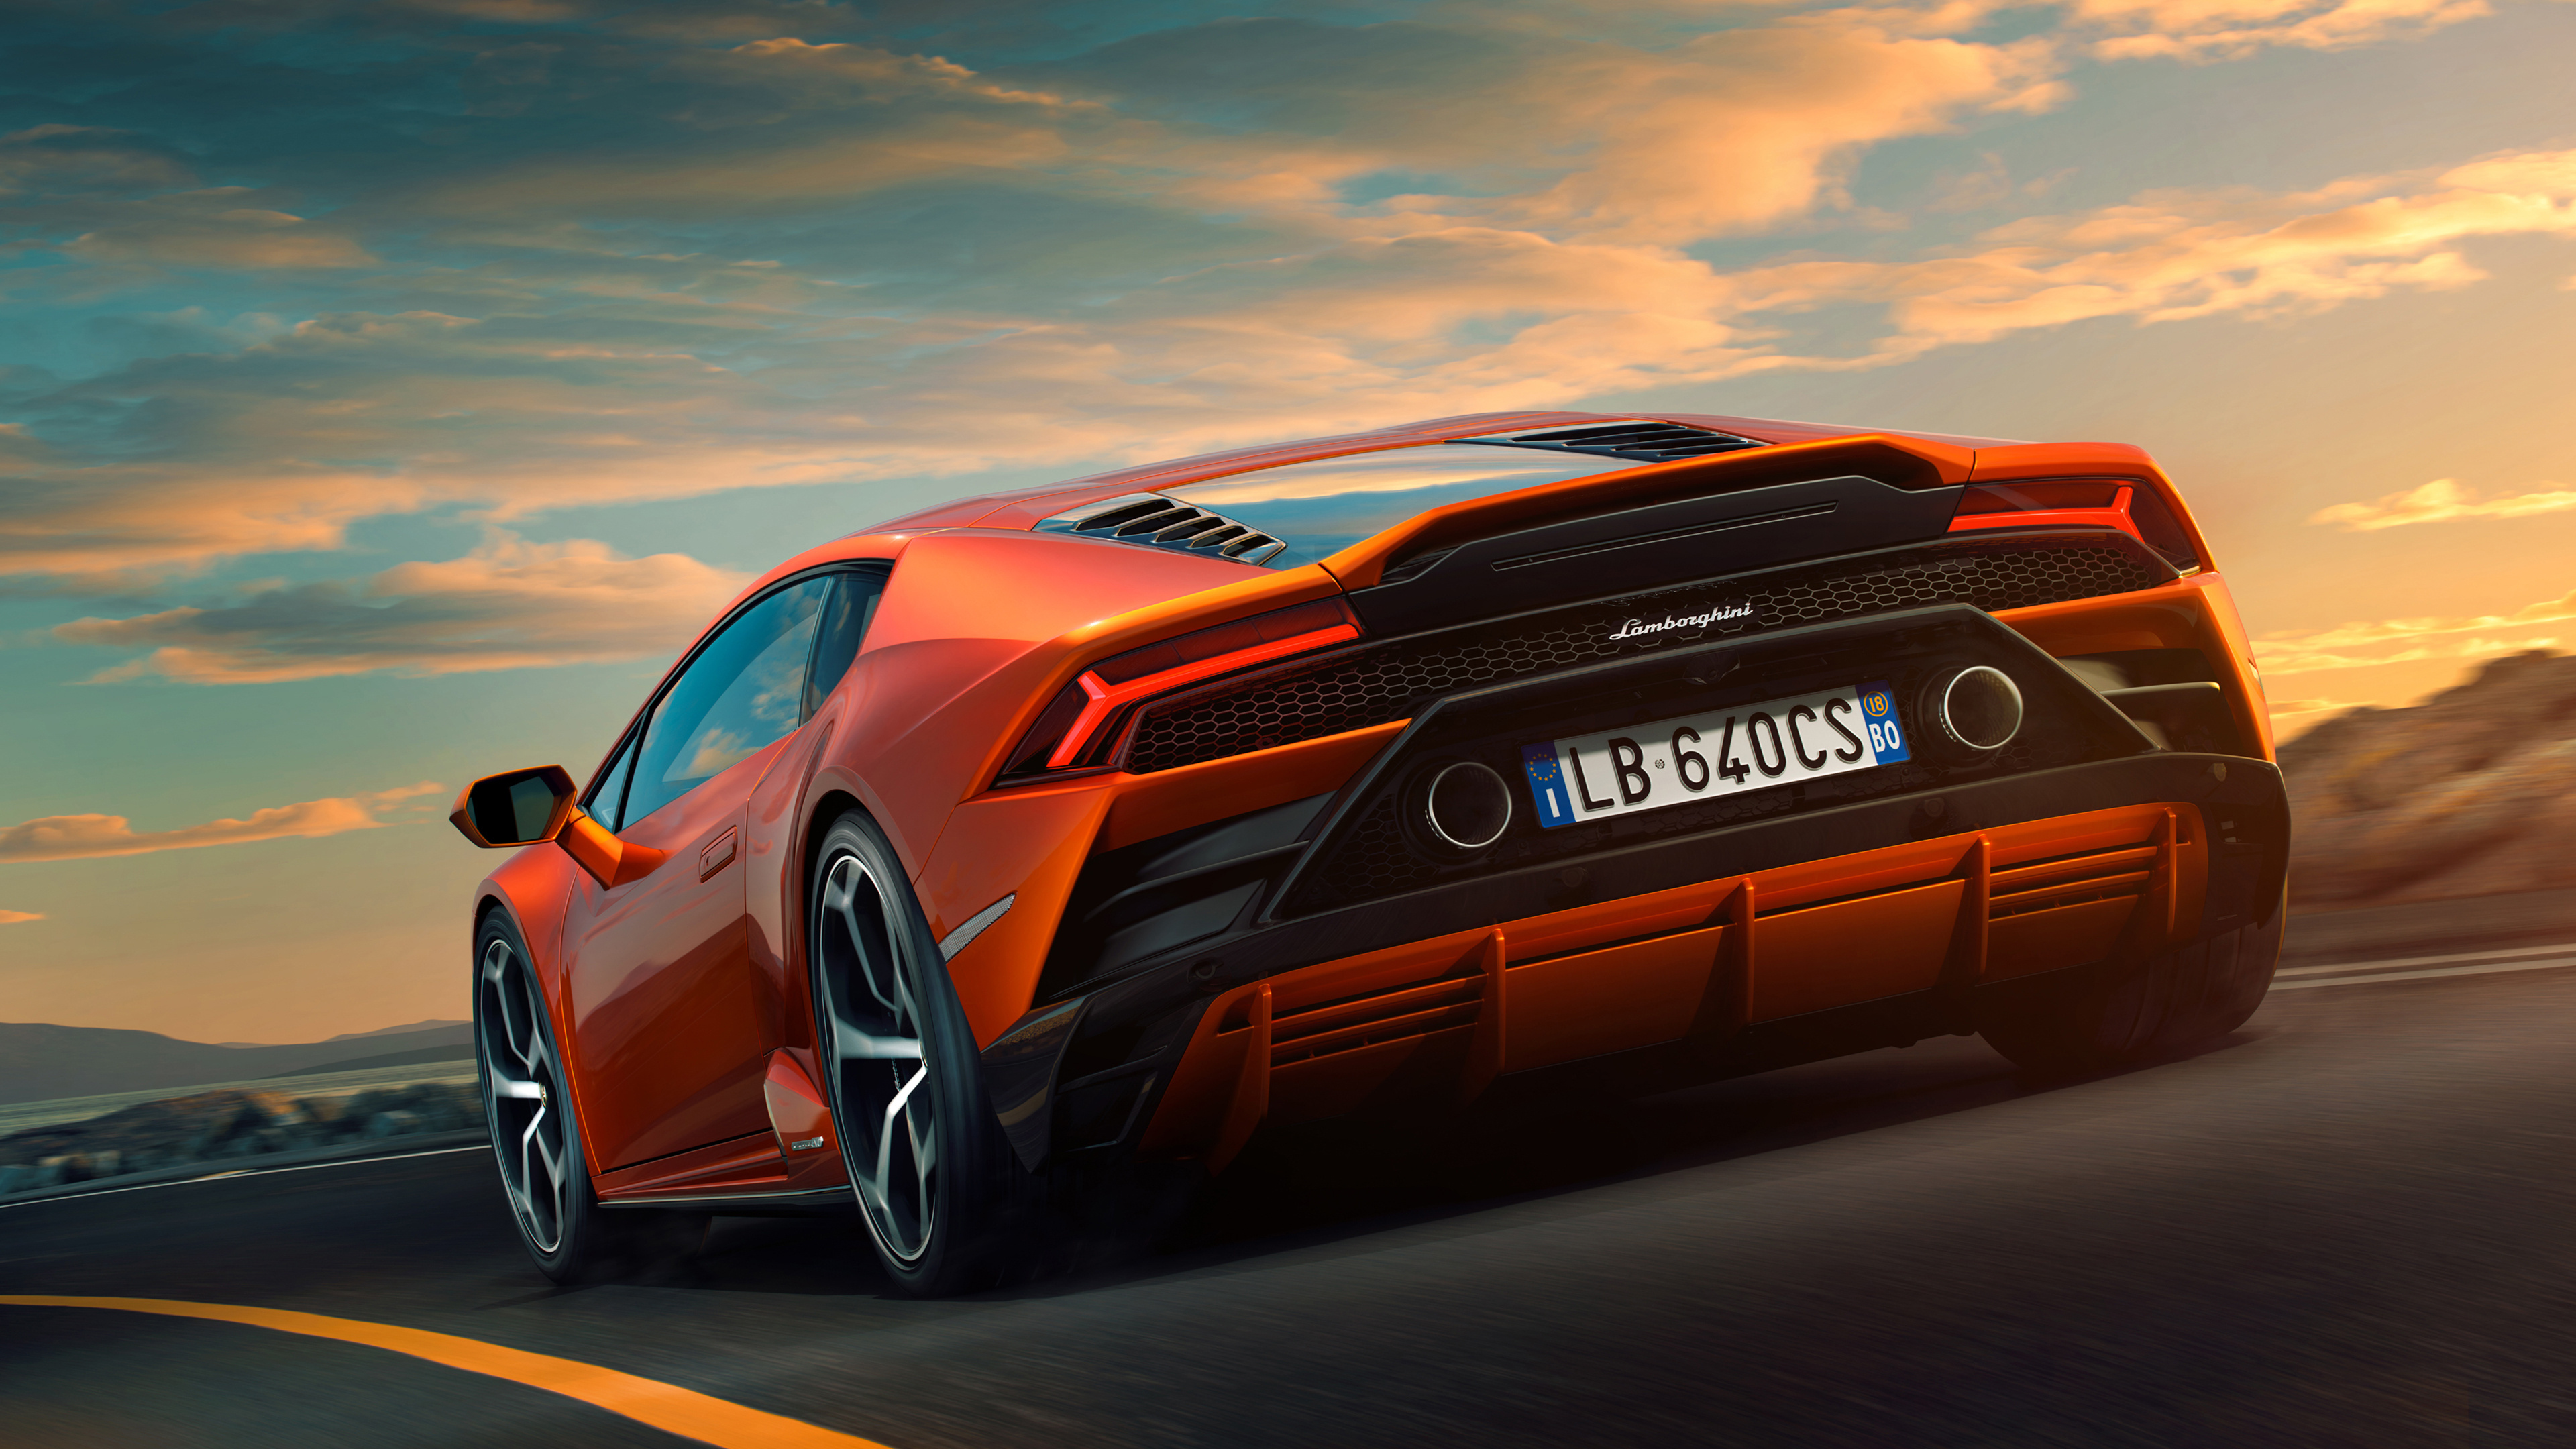 EVO Back View, Lamborghini Huracan Wallpaper, 3840x2160 4K Desktop